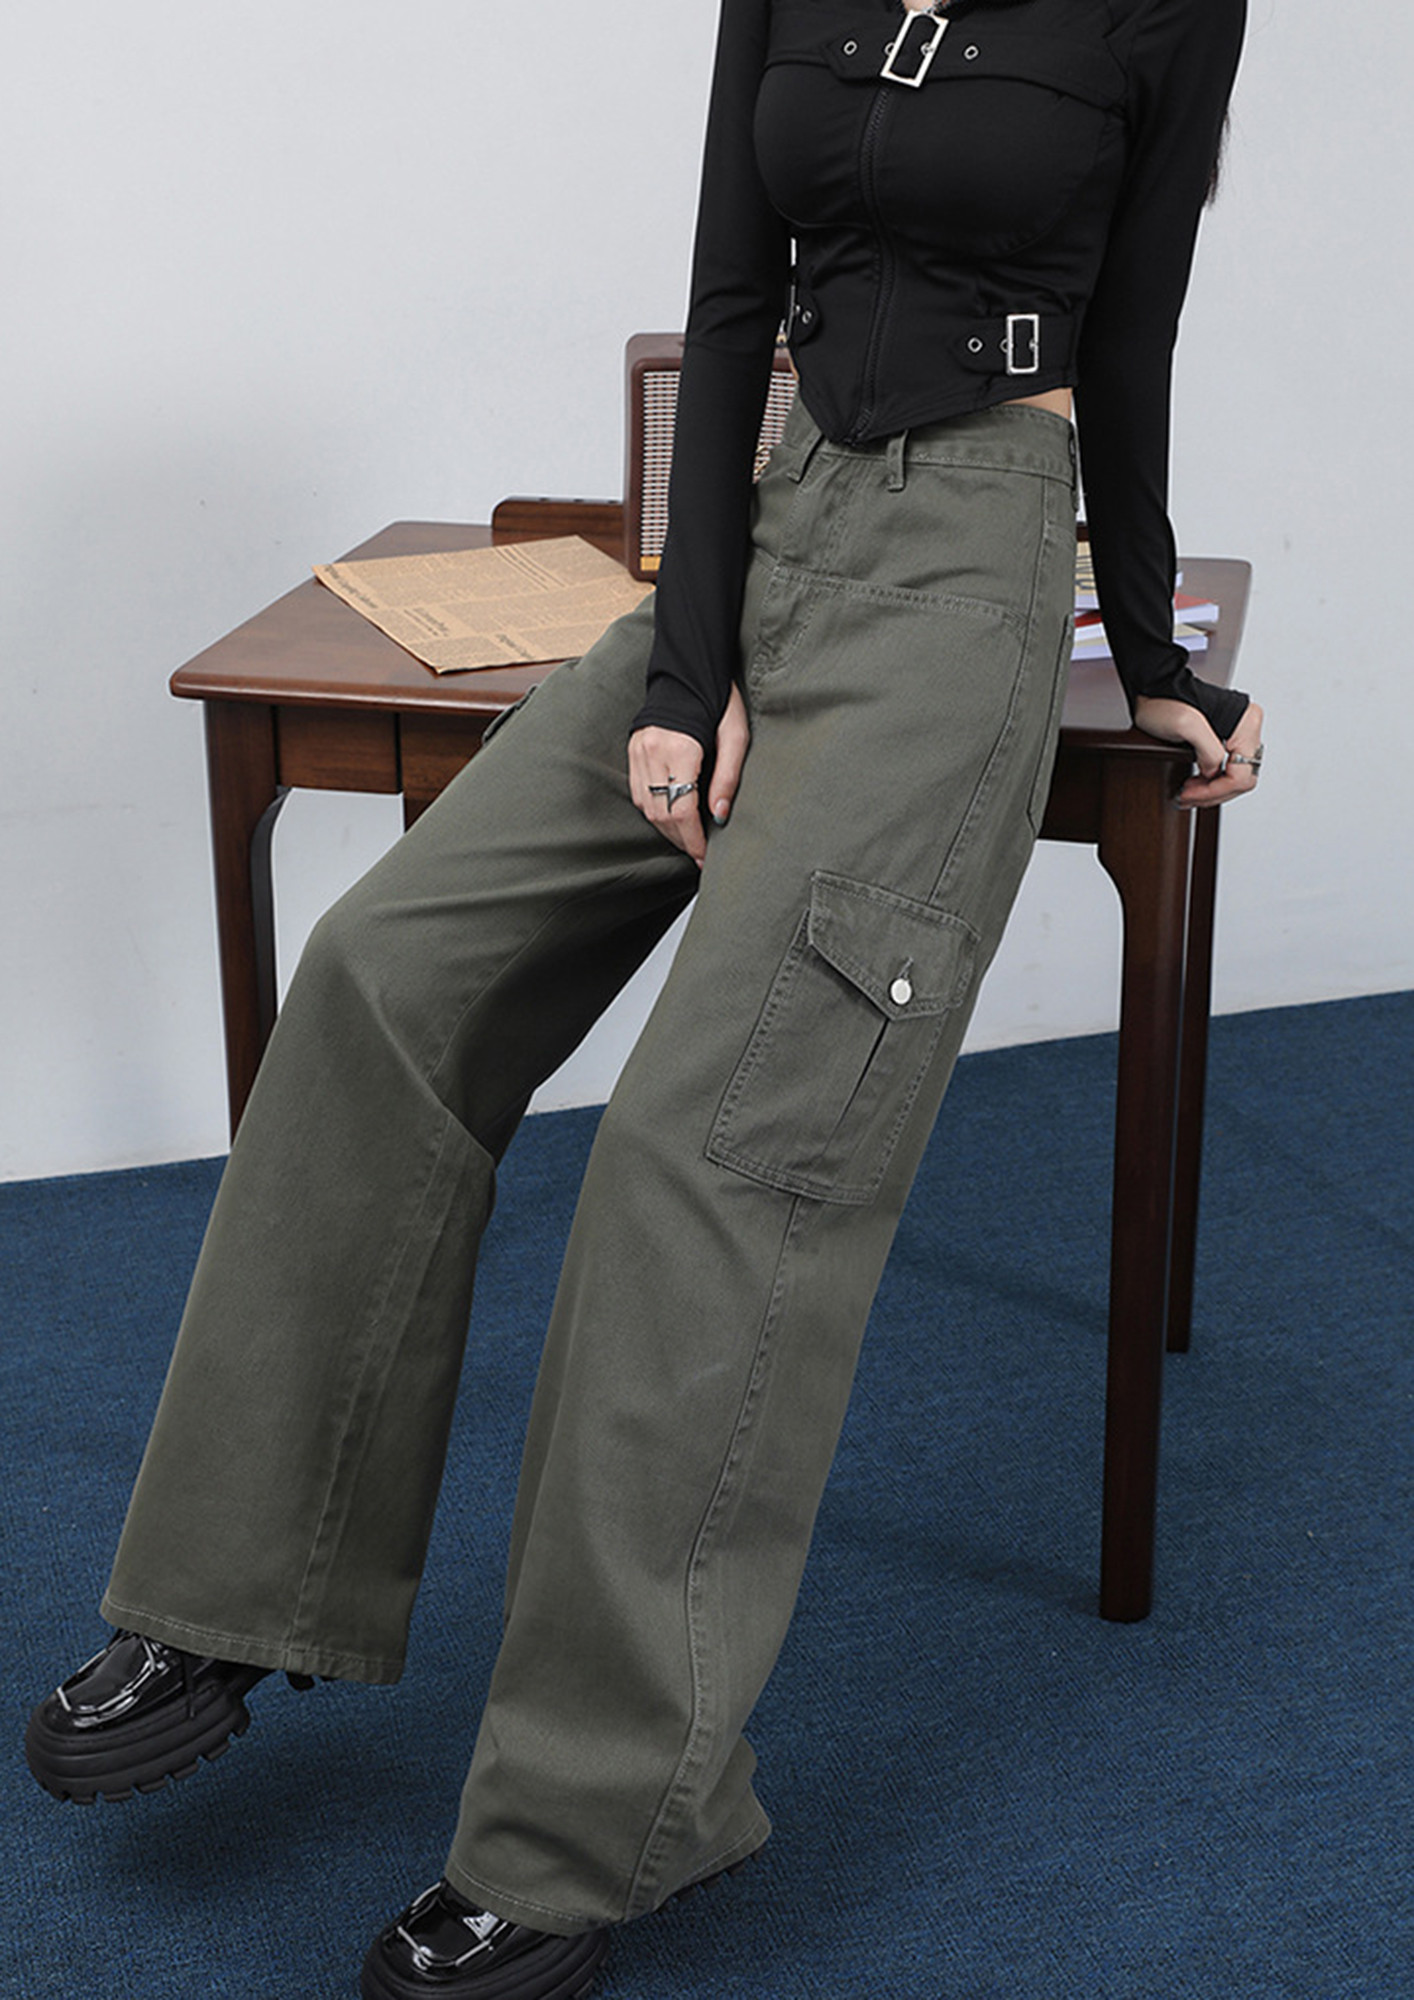 Fashion (Black)Women Cargo Pants Side Flap Pocket Trousers Solid